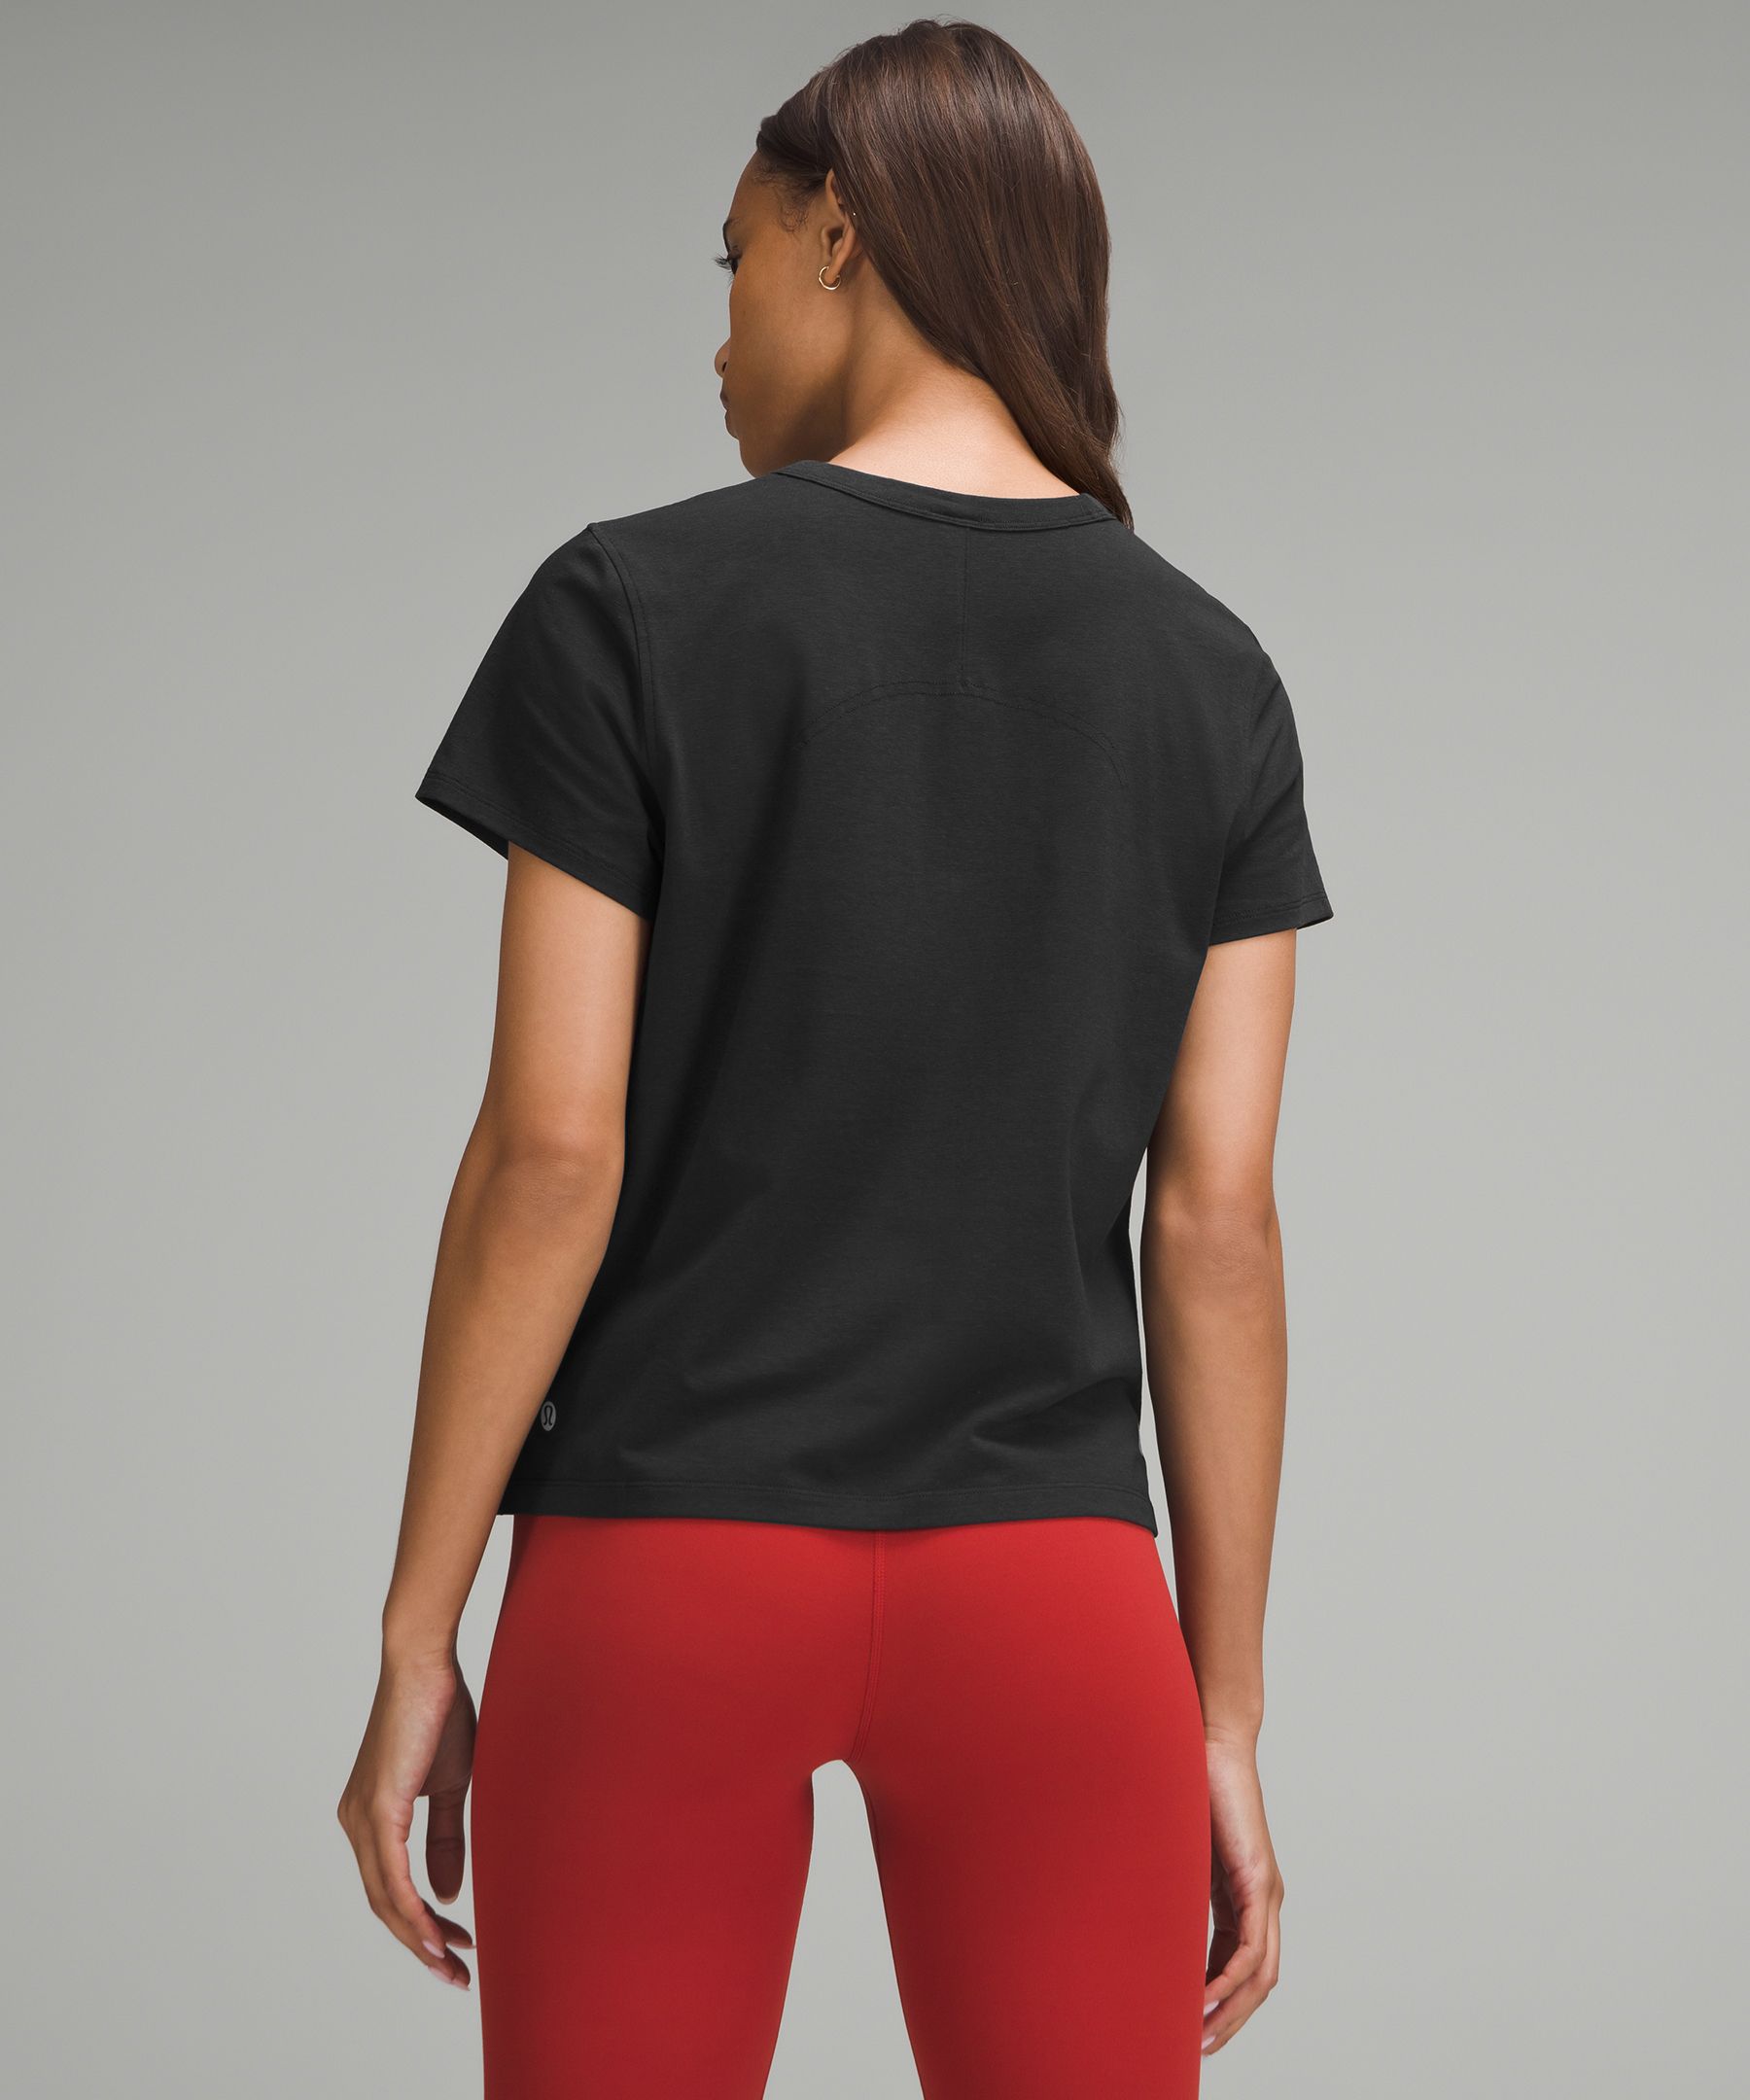 Team Canada Classic-Fit Cotton-Blend T-Shirt *COC Logo | Women's Short Sleeve Shirts & Tee's